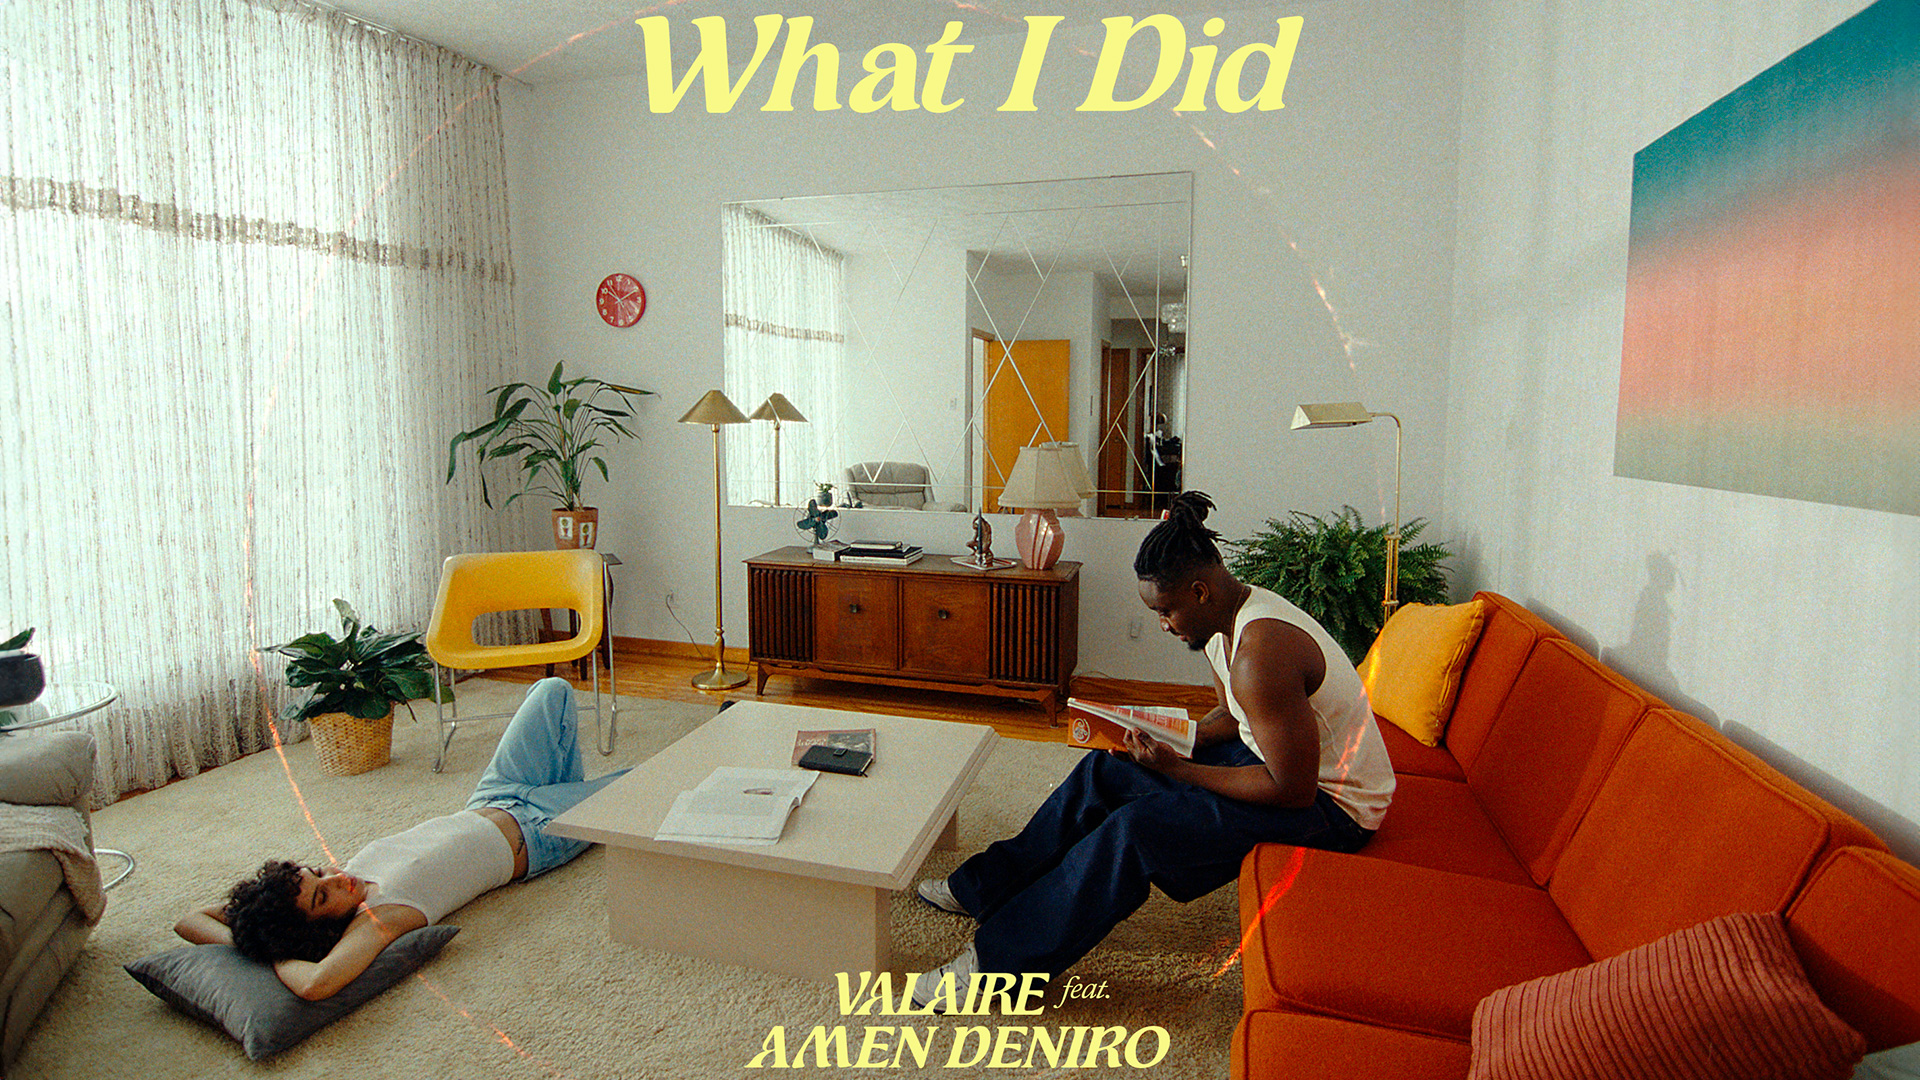 Valaire - What I Did (ft. AMEN DENIRO) | Clip officiel